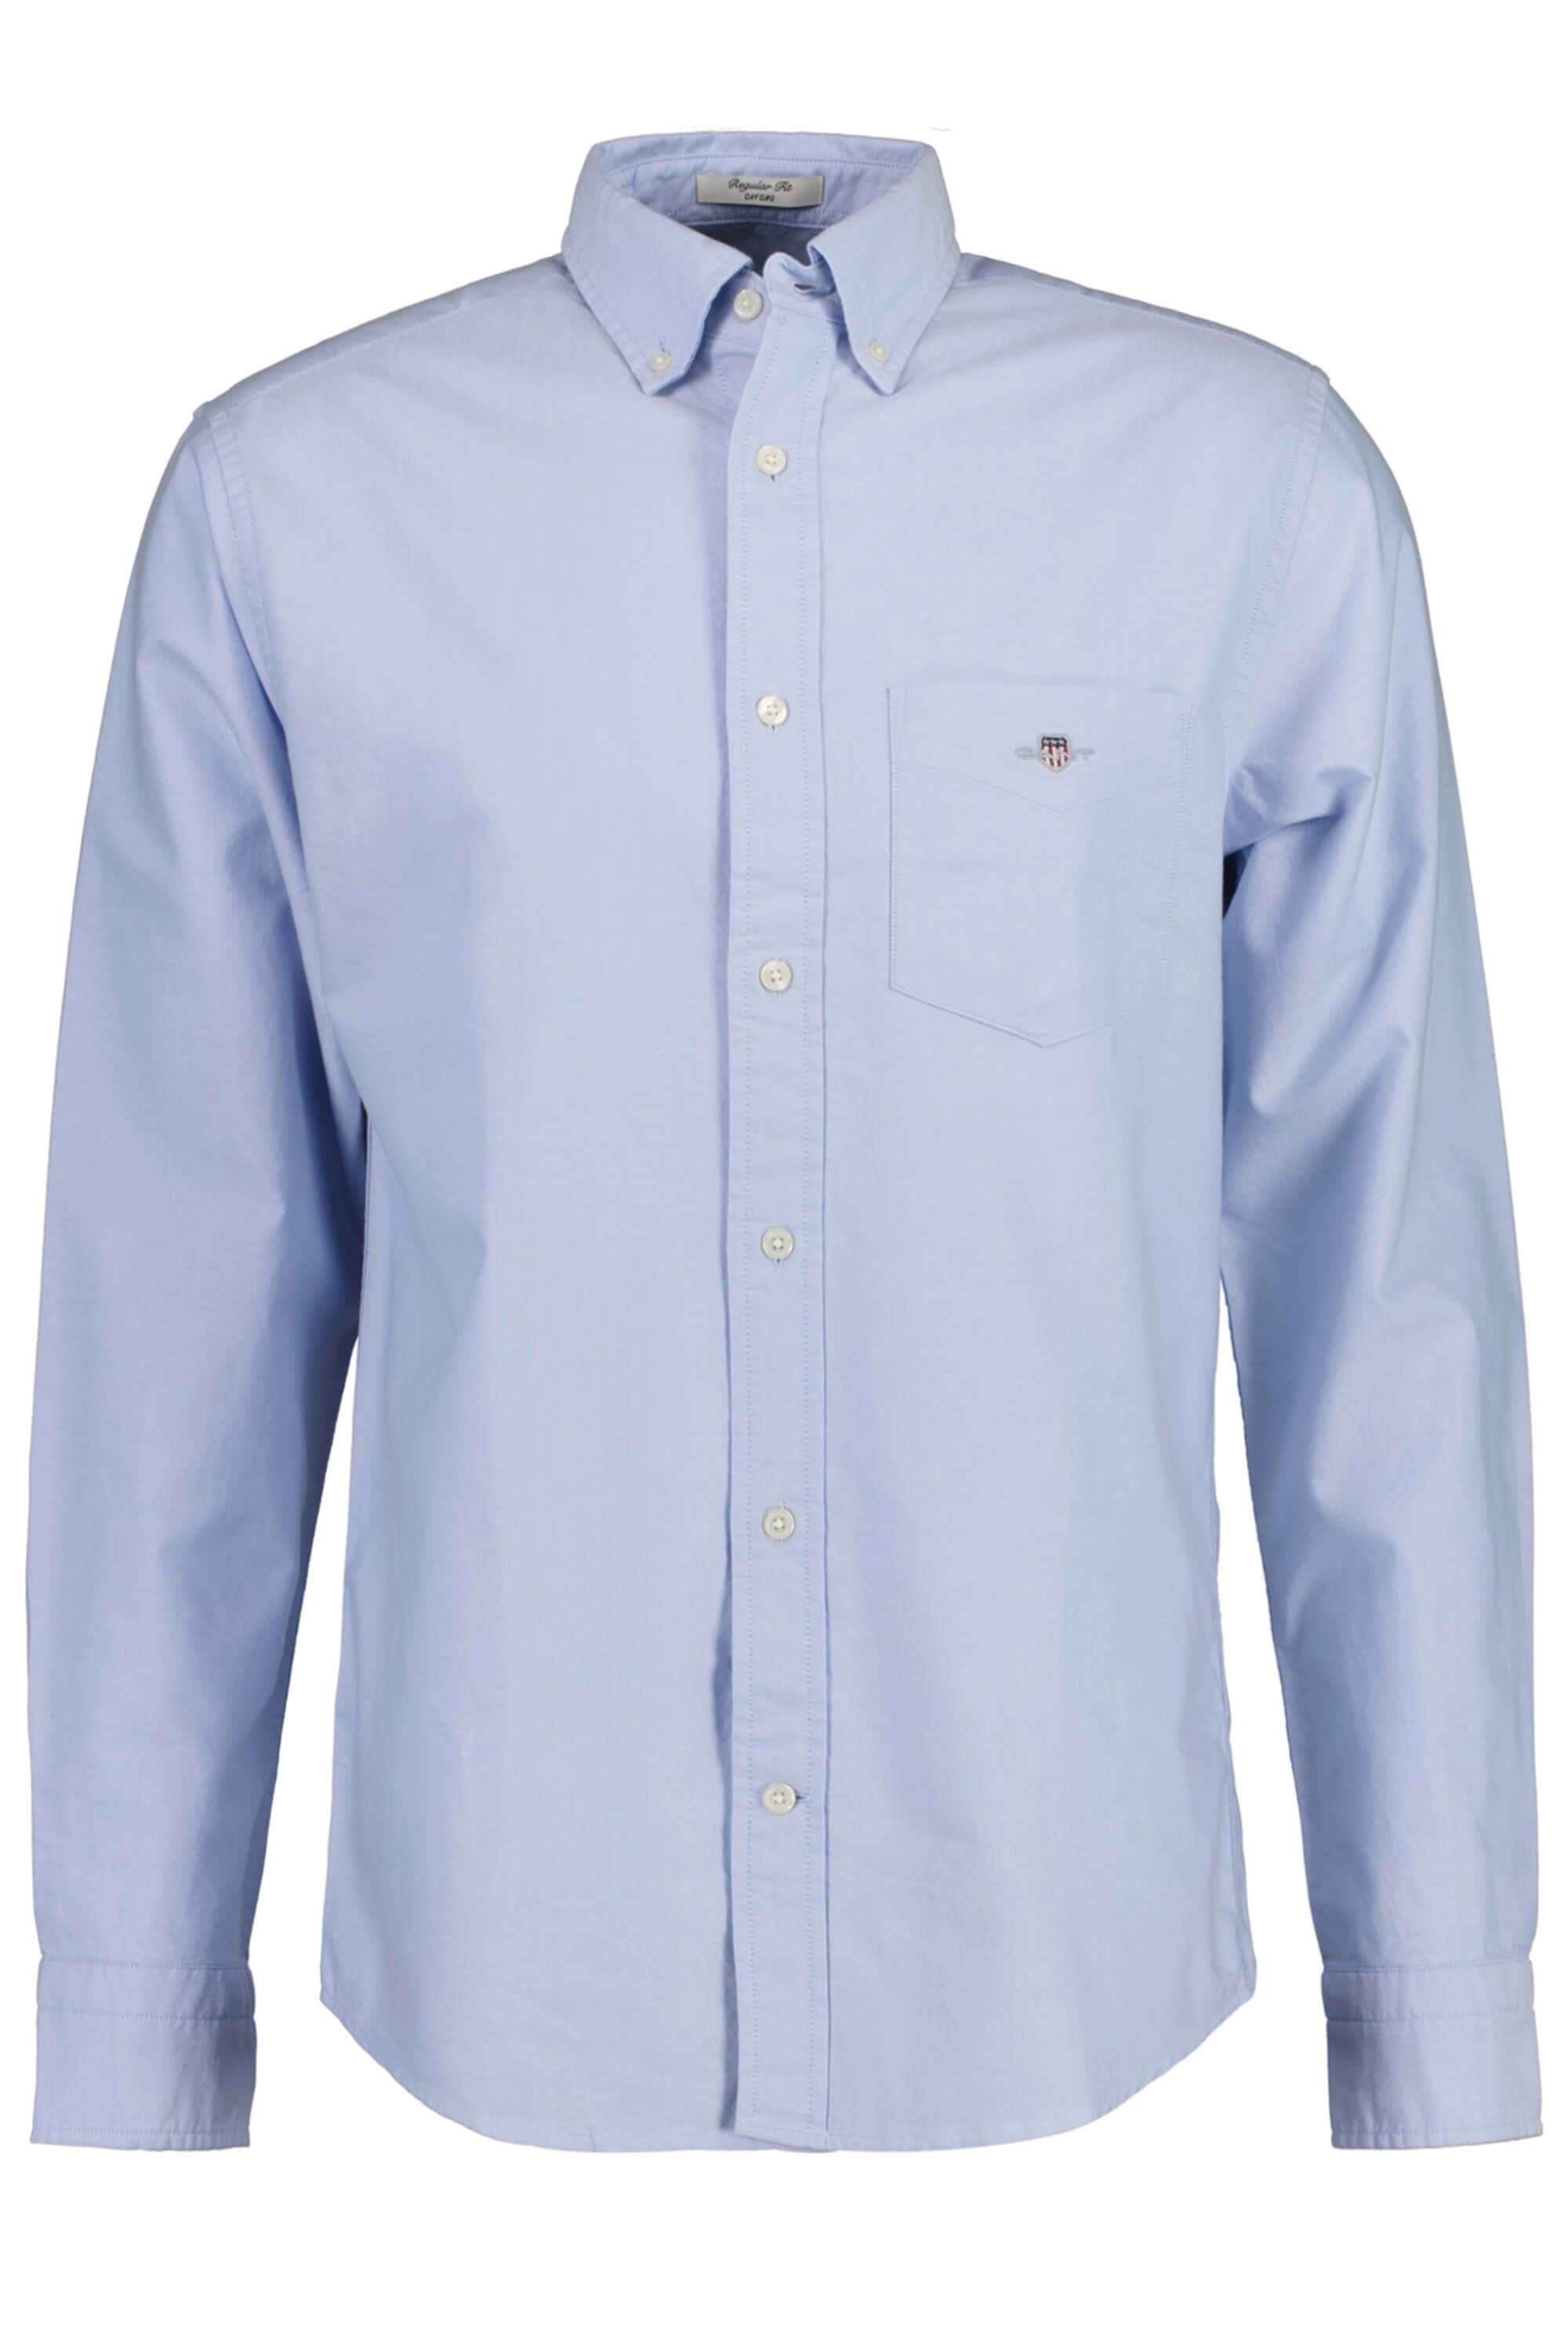 Gant Reg Oxford Shirt Light Blue